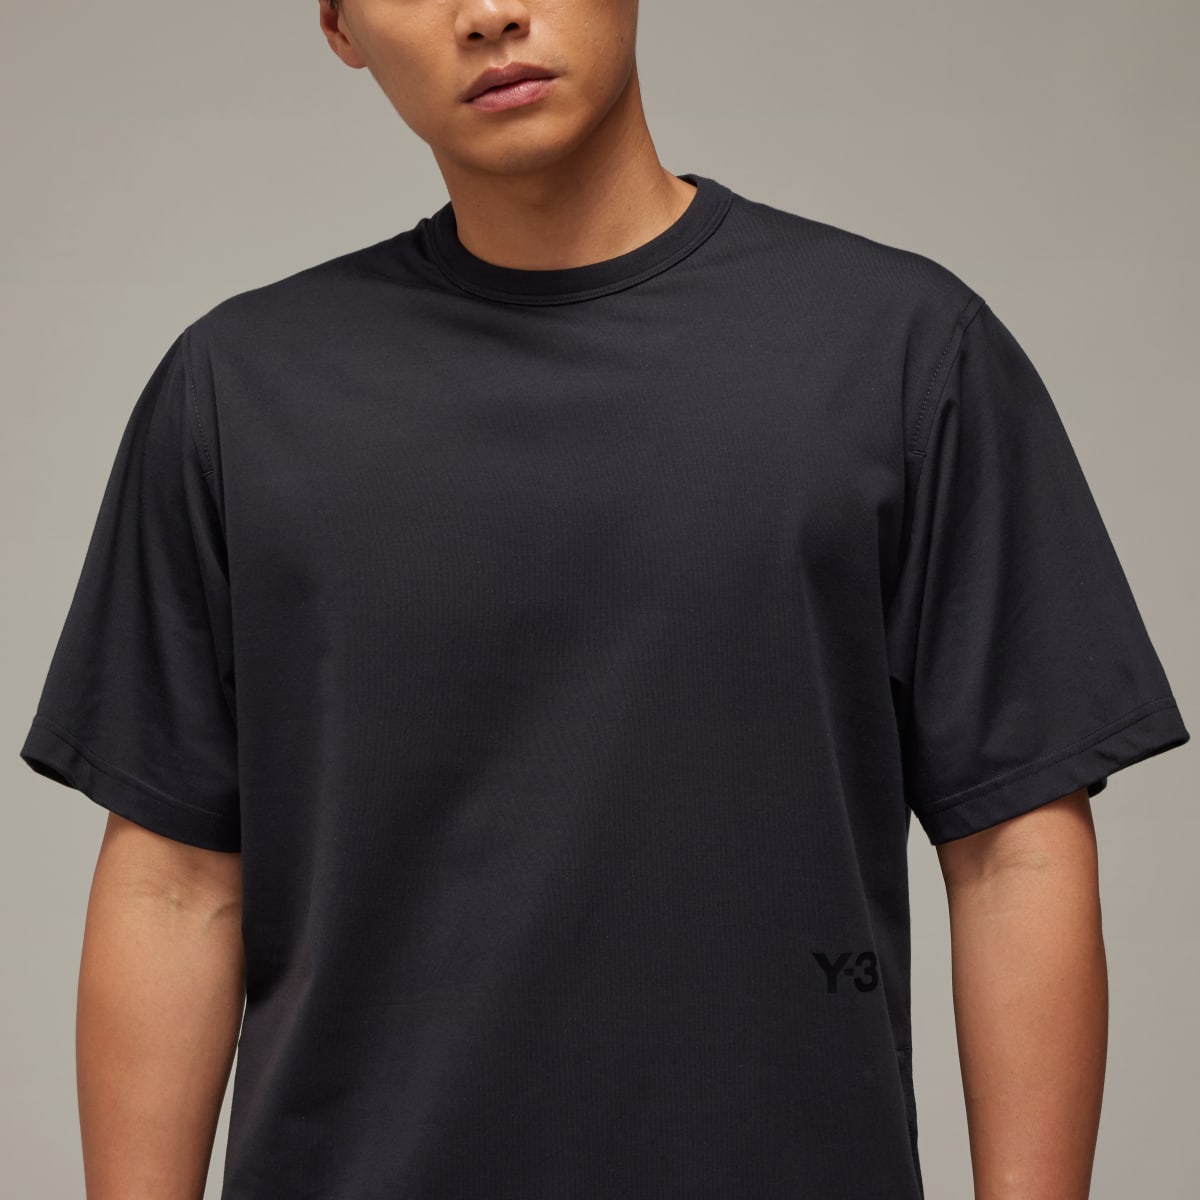 Adidas Y-3 Premium Short Sleeve T-Shirt. 8